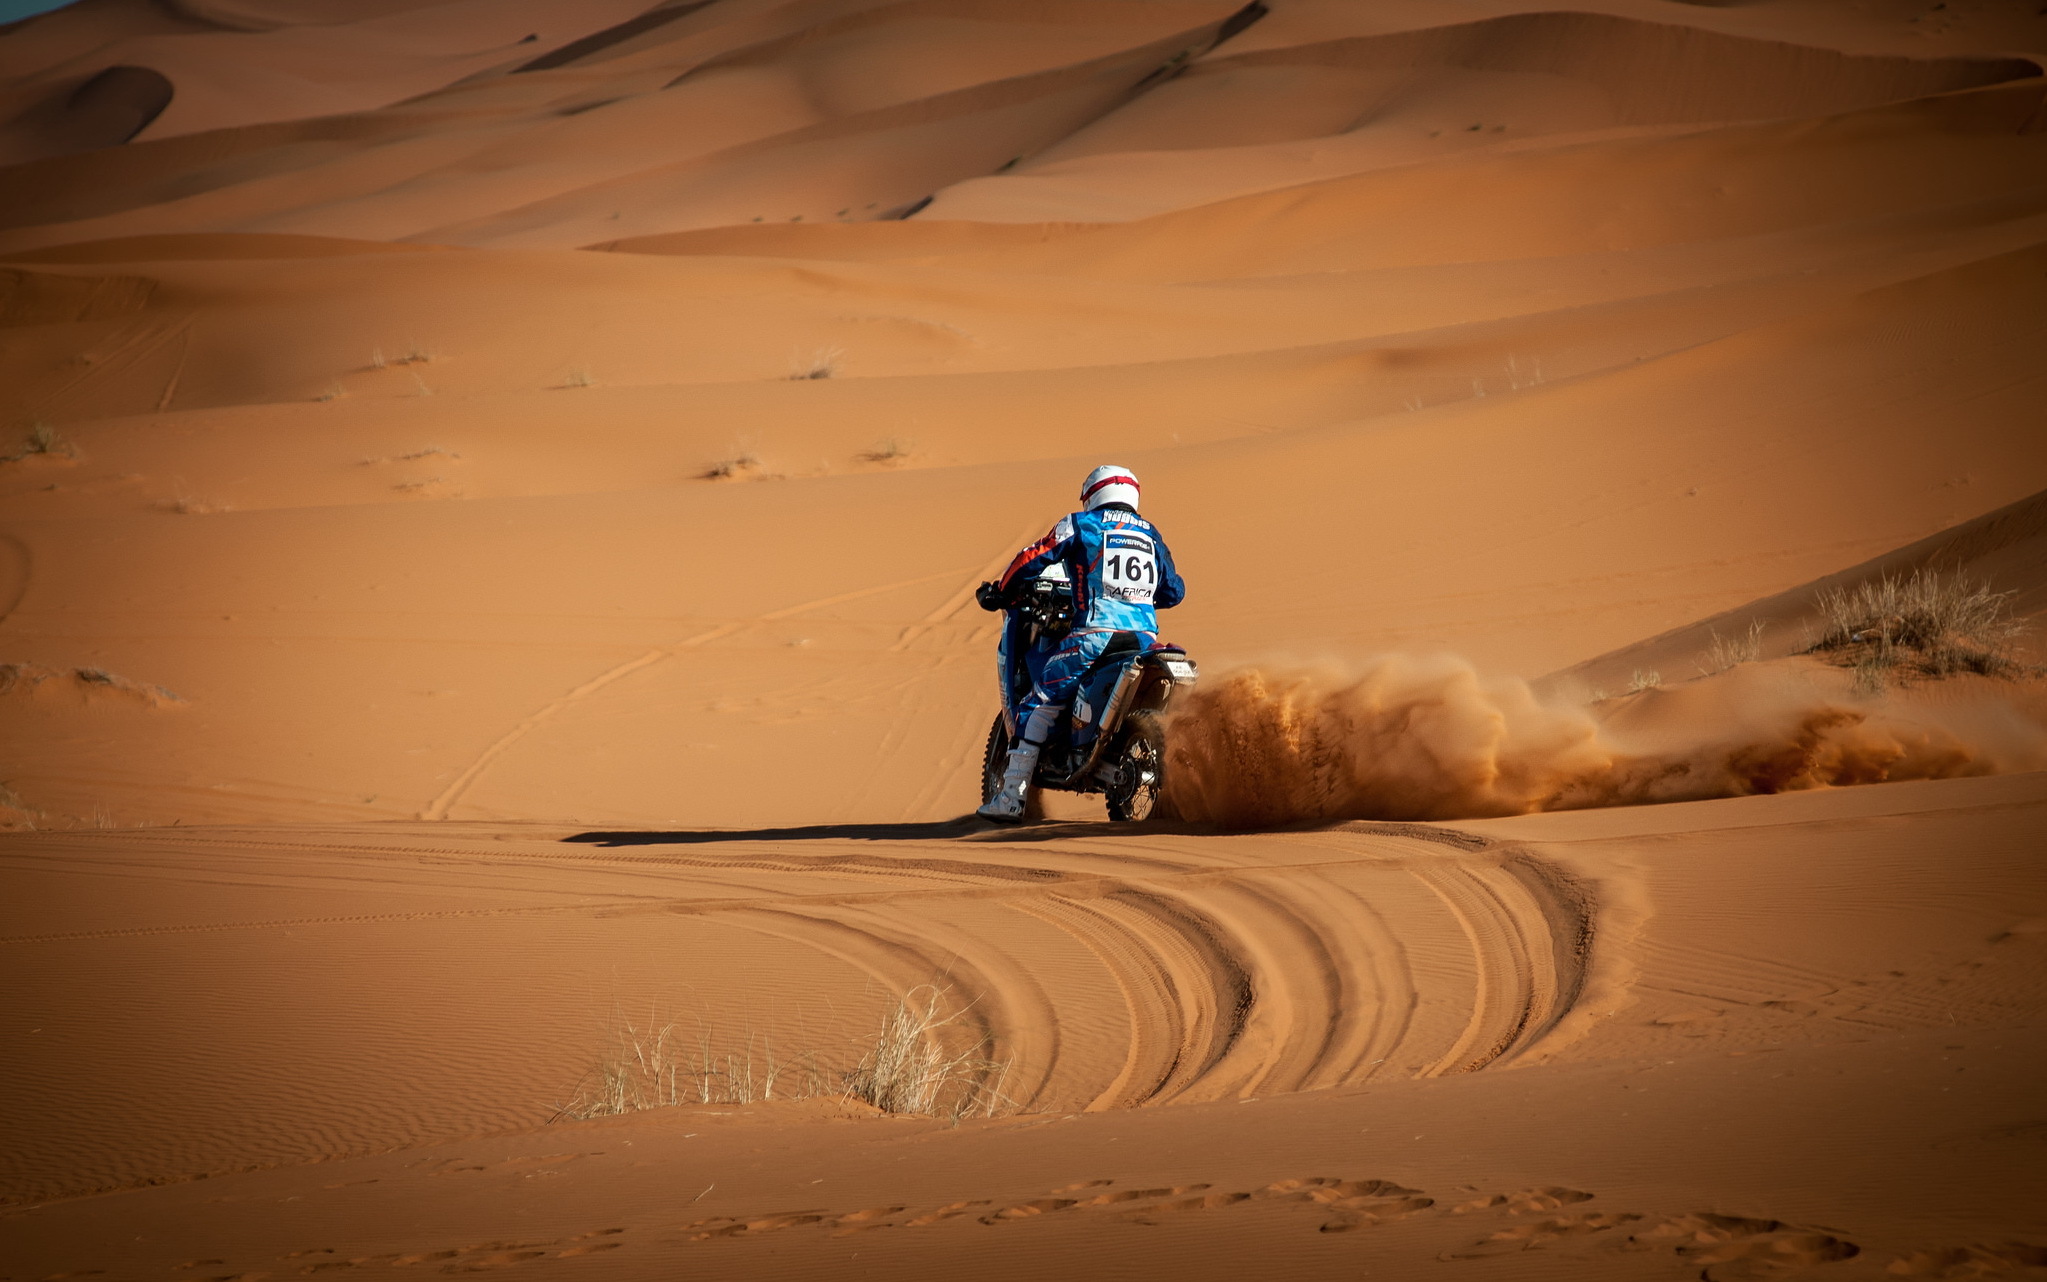 Download Phone wallpaper motorcycle, motorcycles, desert, sand